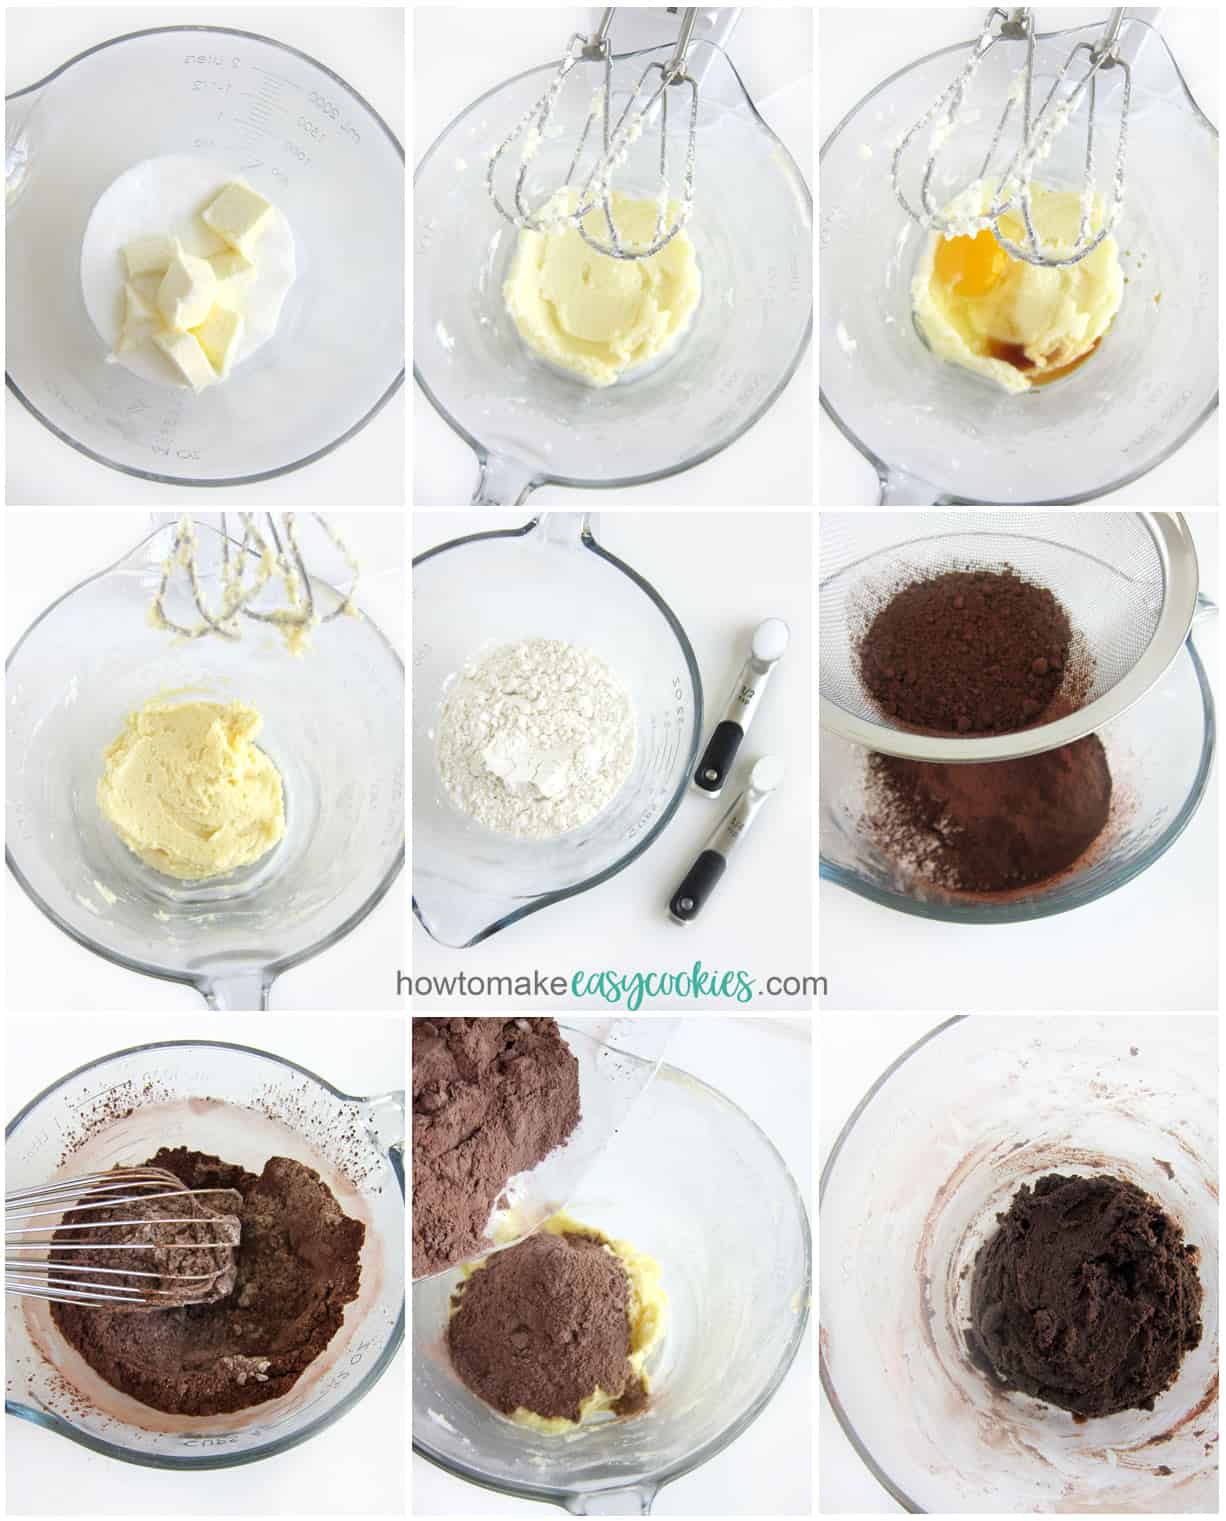 making chocolate cookie dough using dark cocoa powder